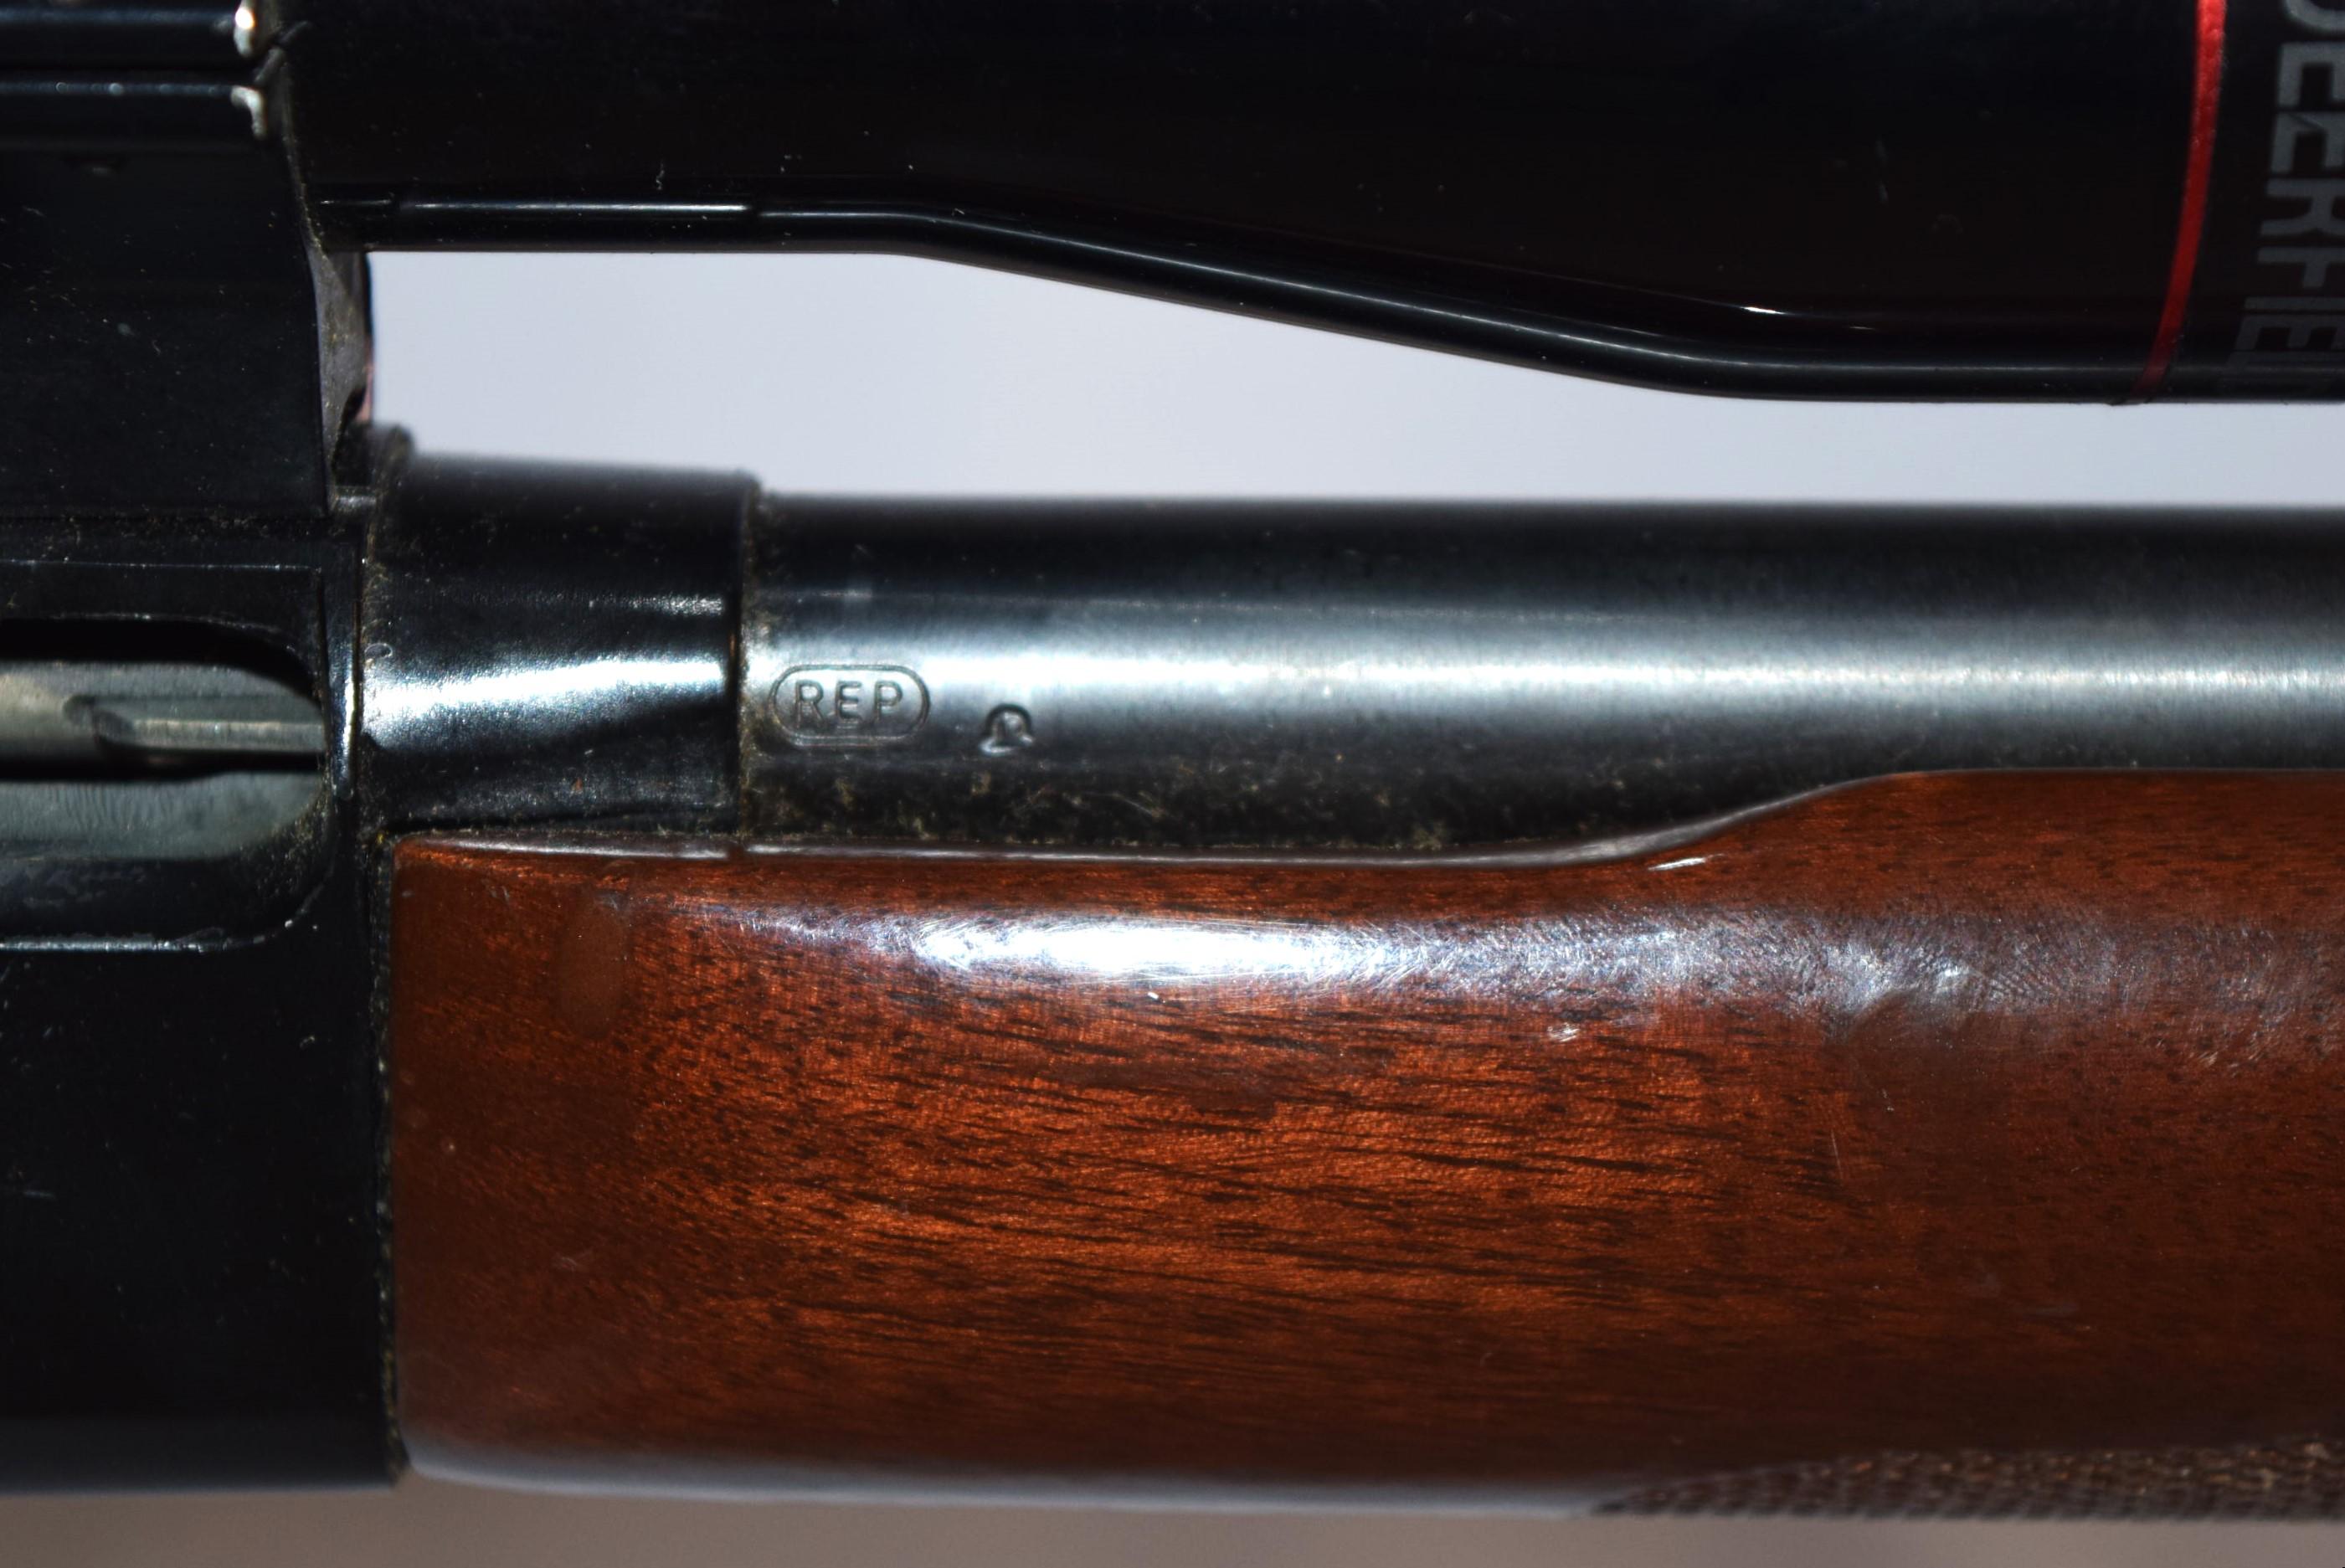 Remington Speedmaster Model 552 Rifle